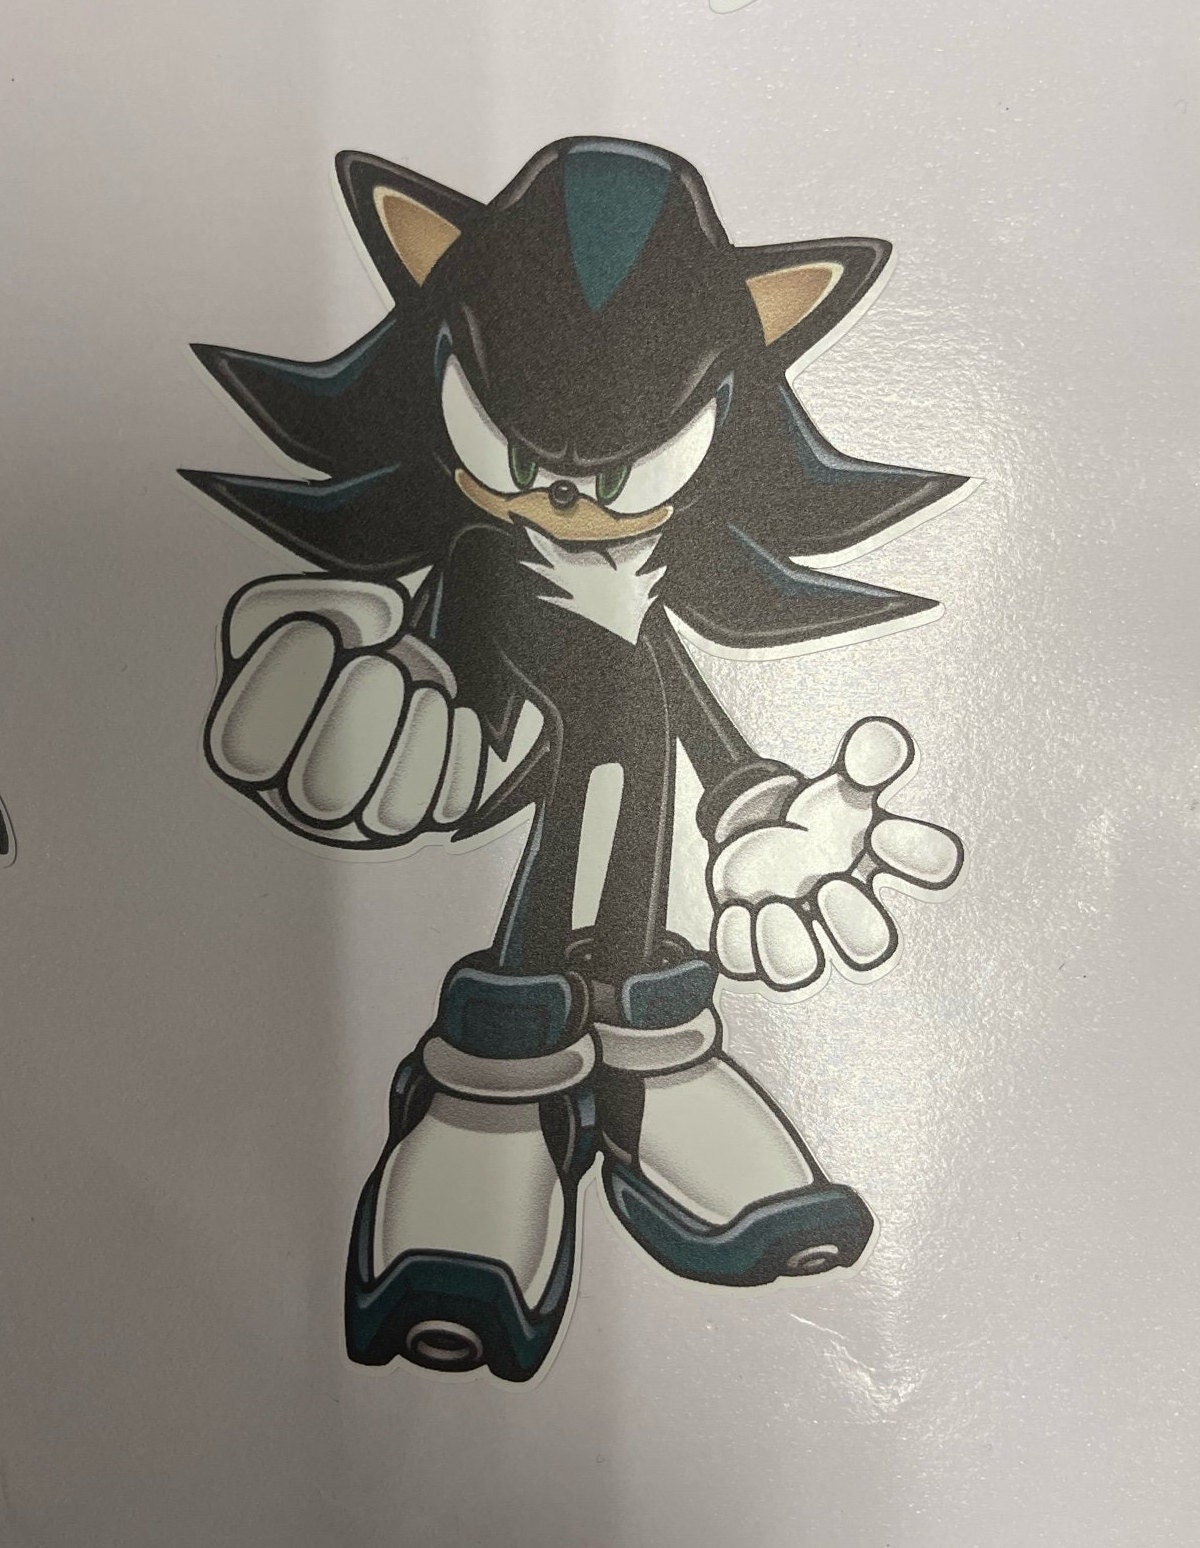 Custom Plush Just Like Dark Sonic the Sonic X the Dark Brotherhood Inspired  by funmade Handmade Fro Mthe Drawing to Order. 